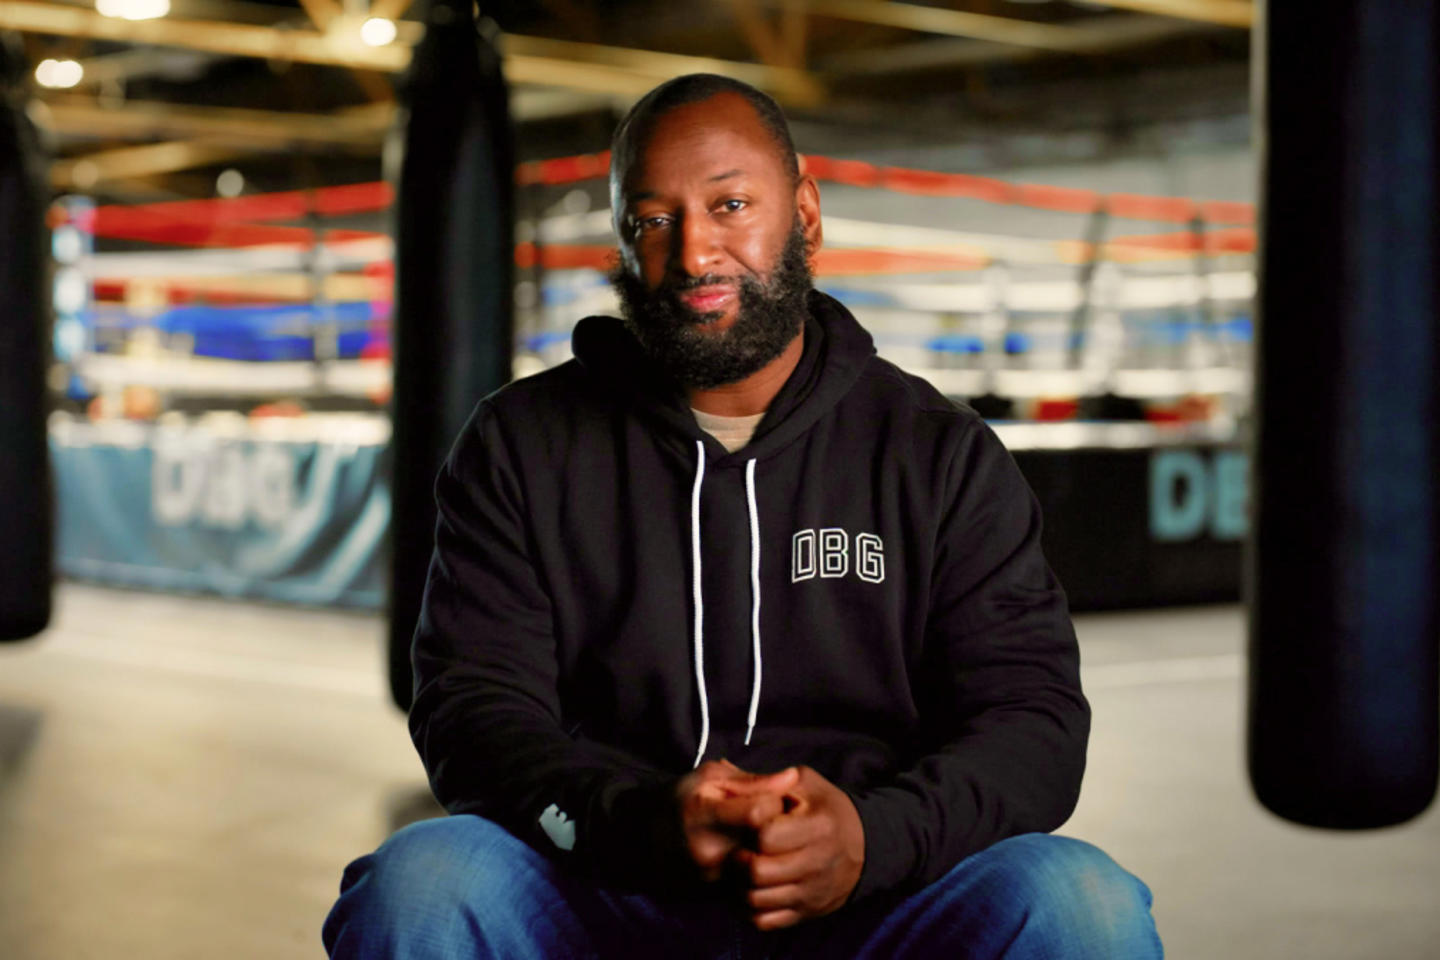 Downtown Boxing Gym founder Khali Sweeney